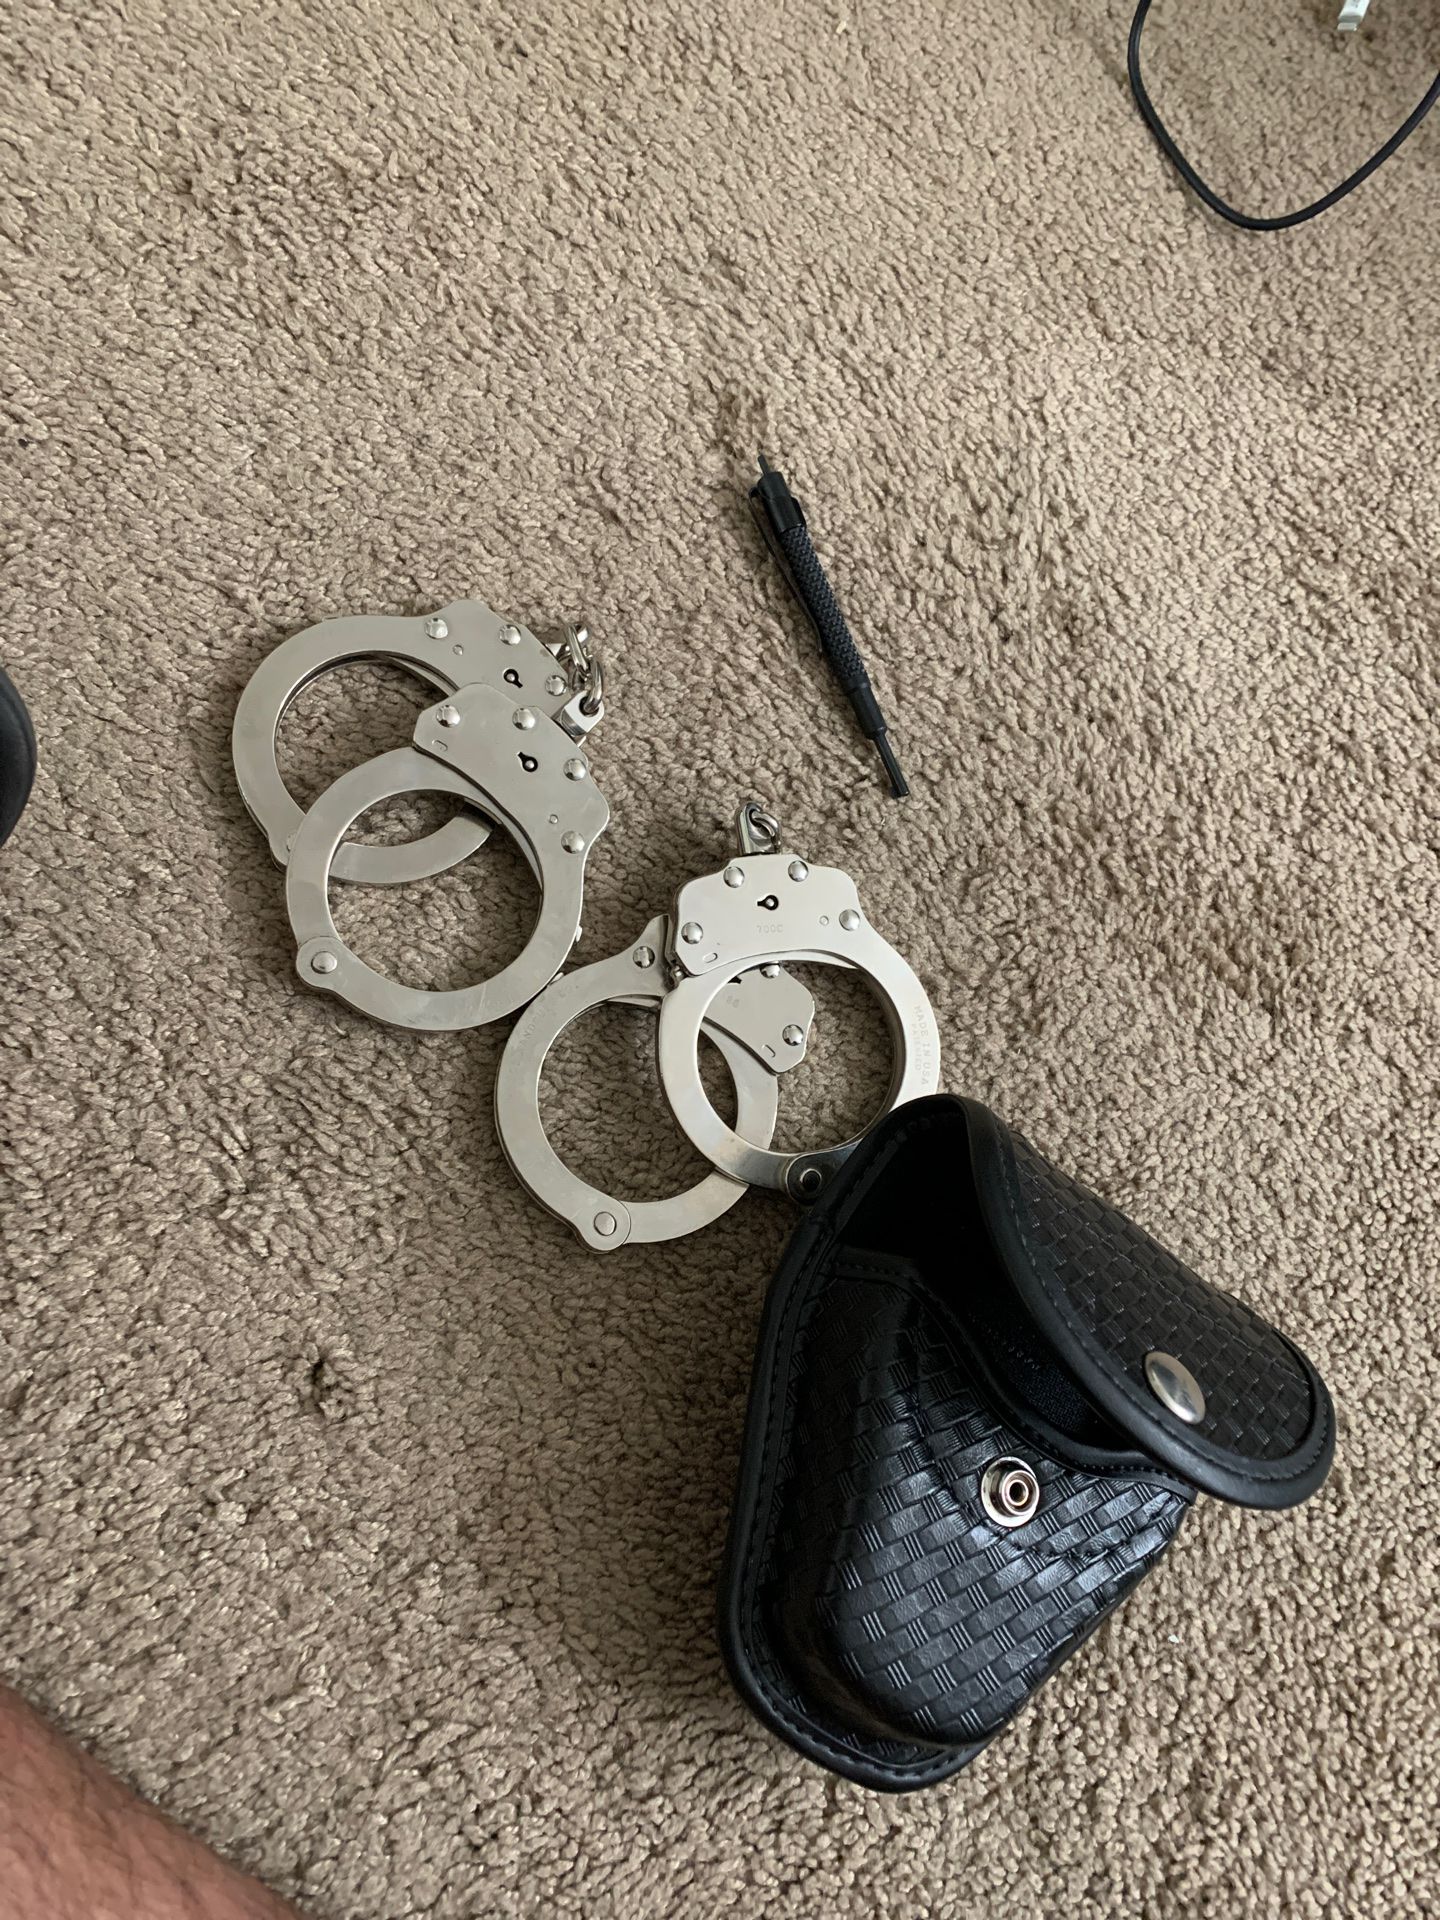 Peerless handcuffs